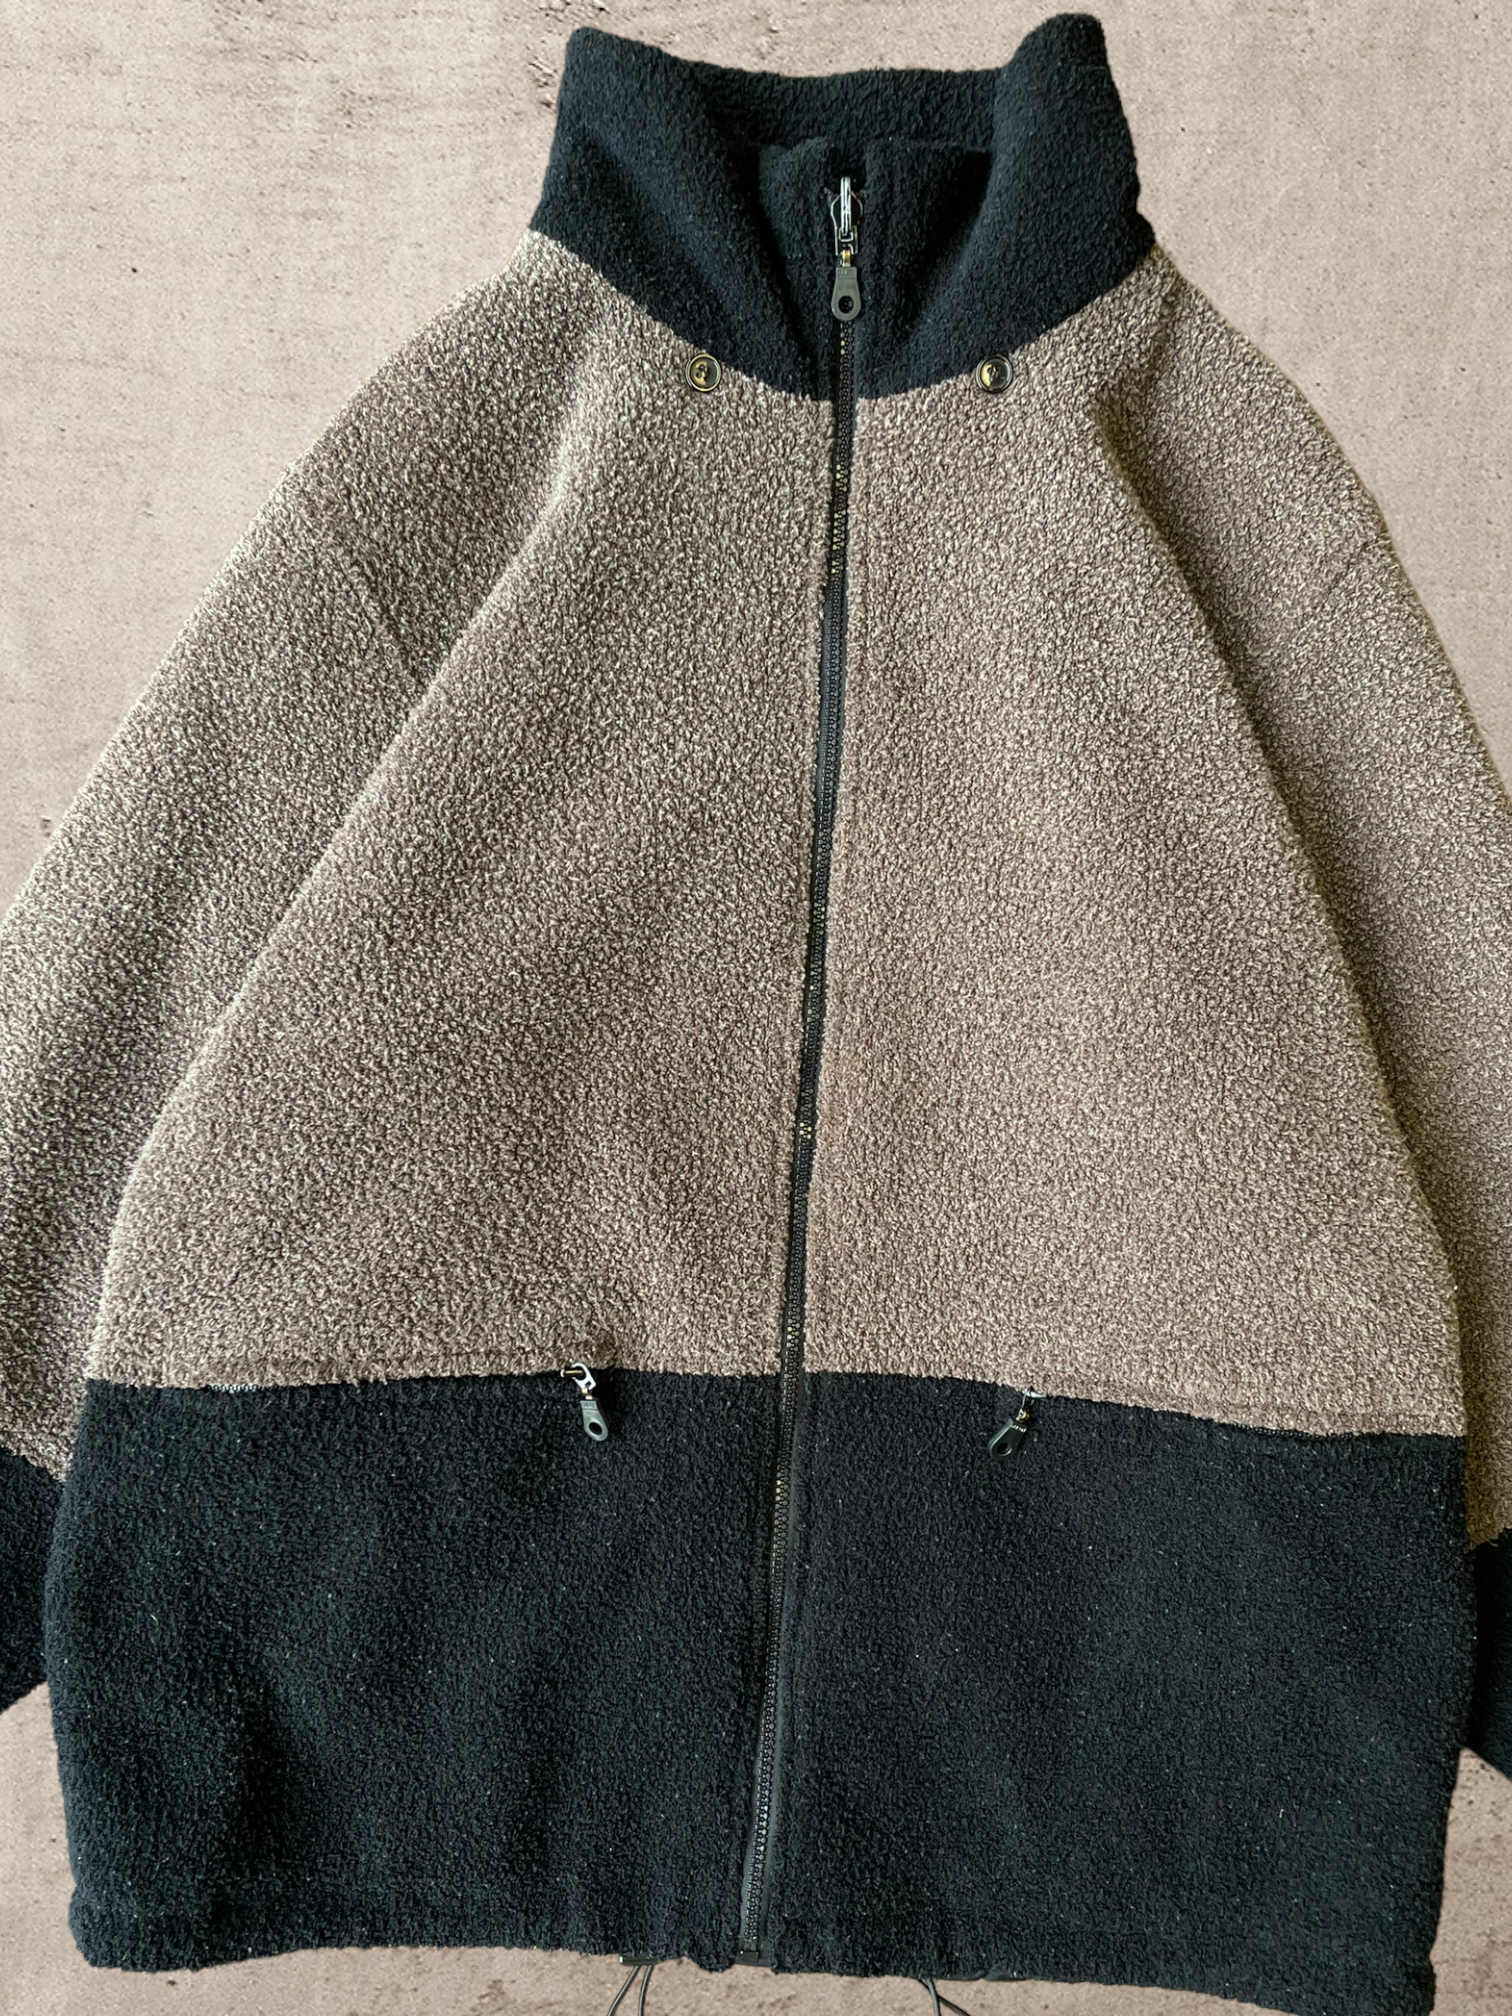 90s Reversible Fleece Jacket - XL